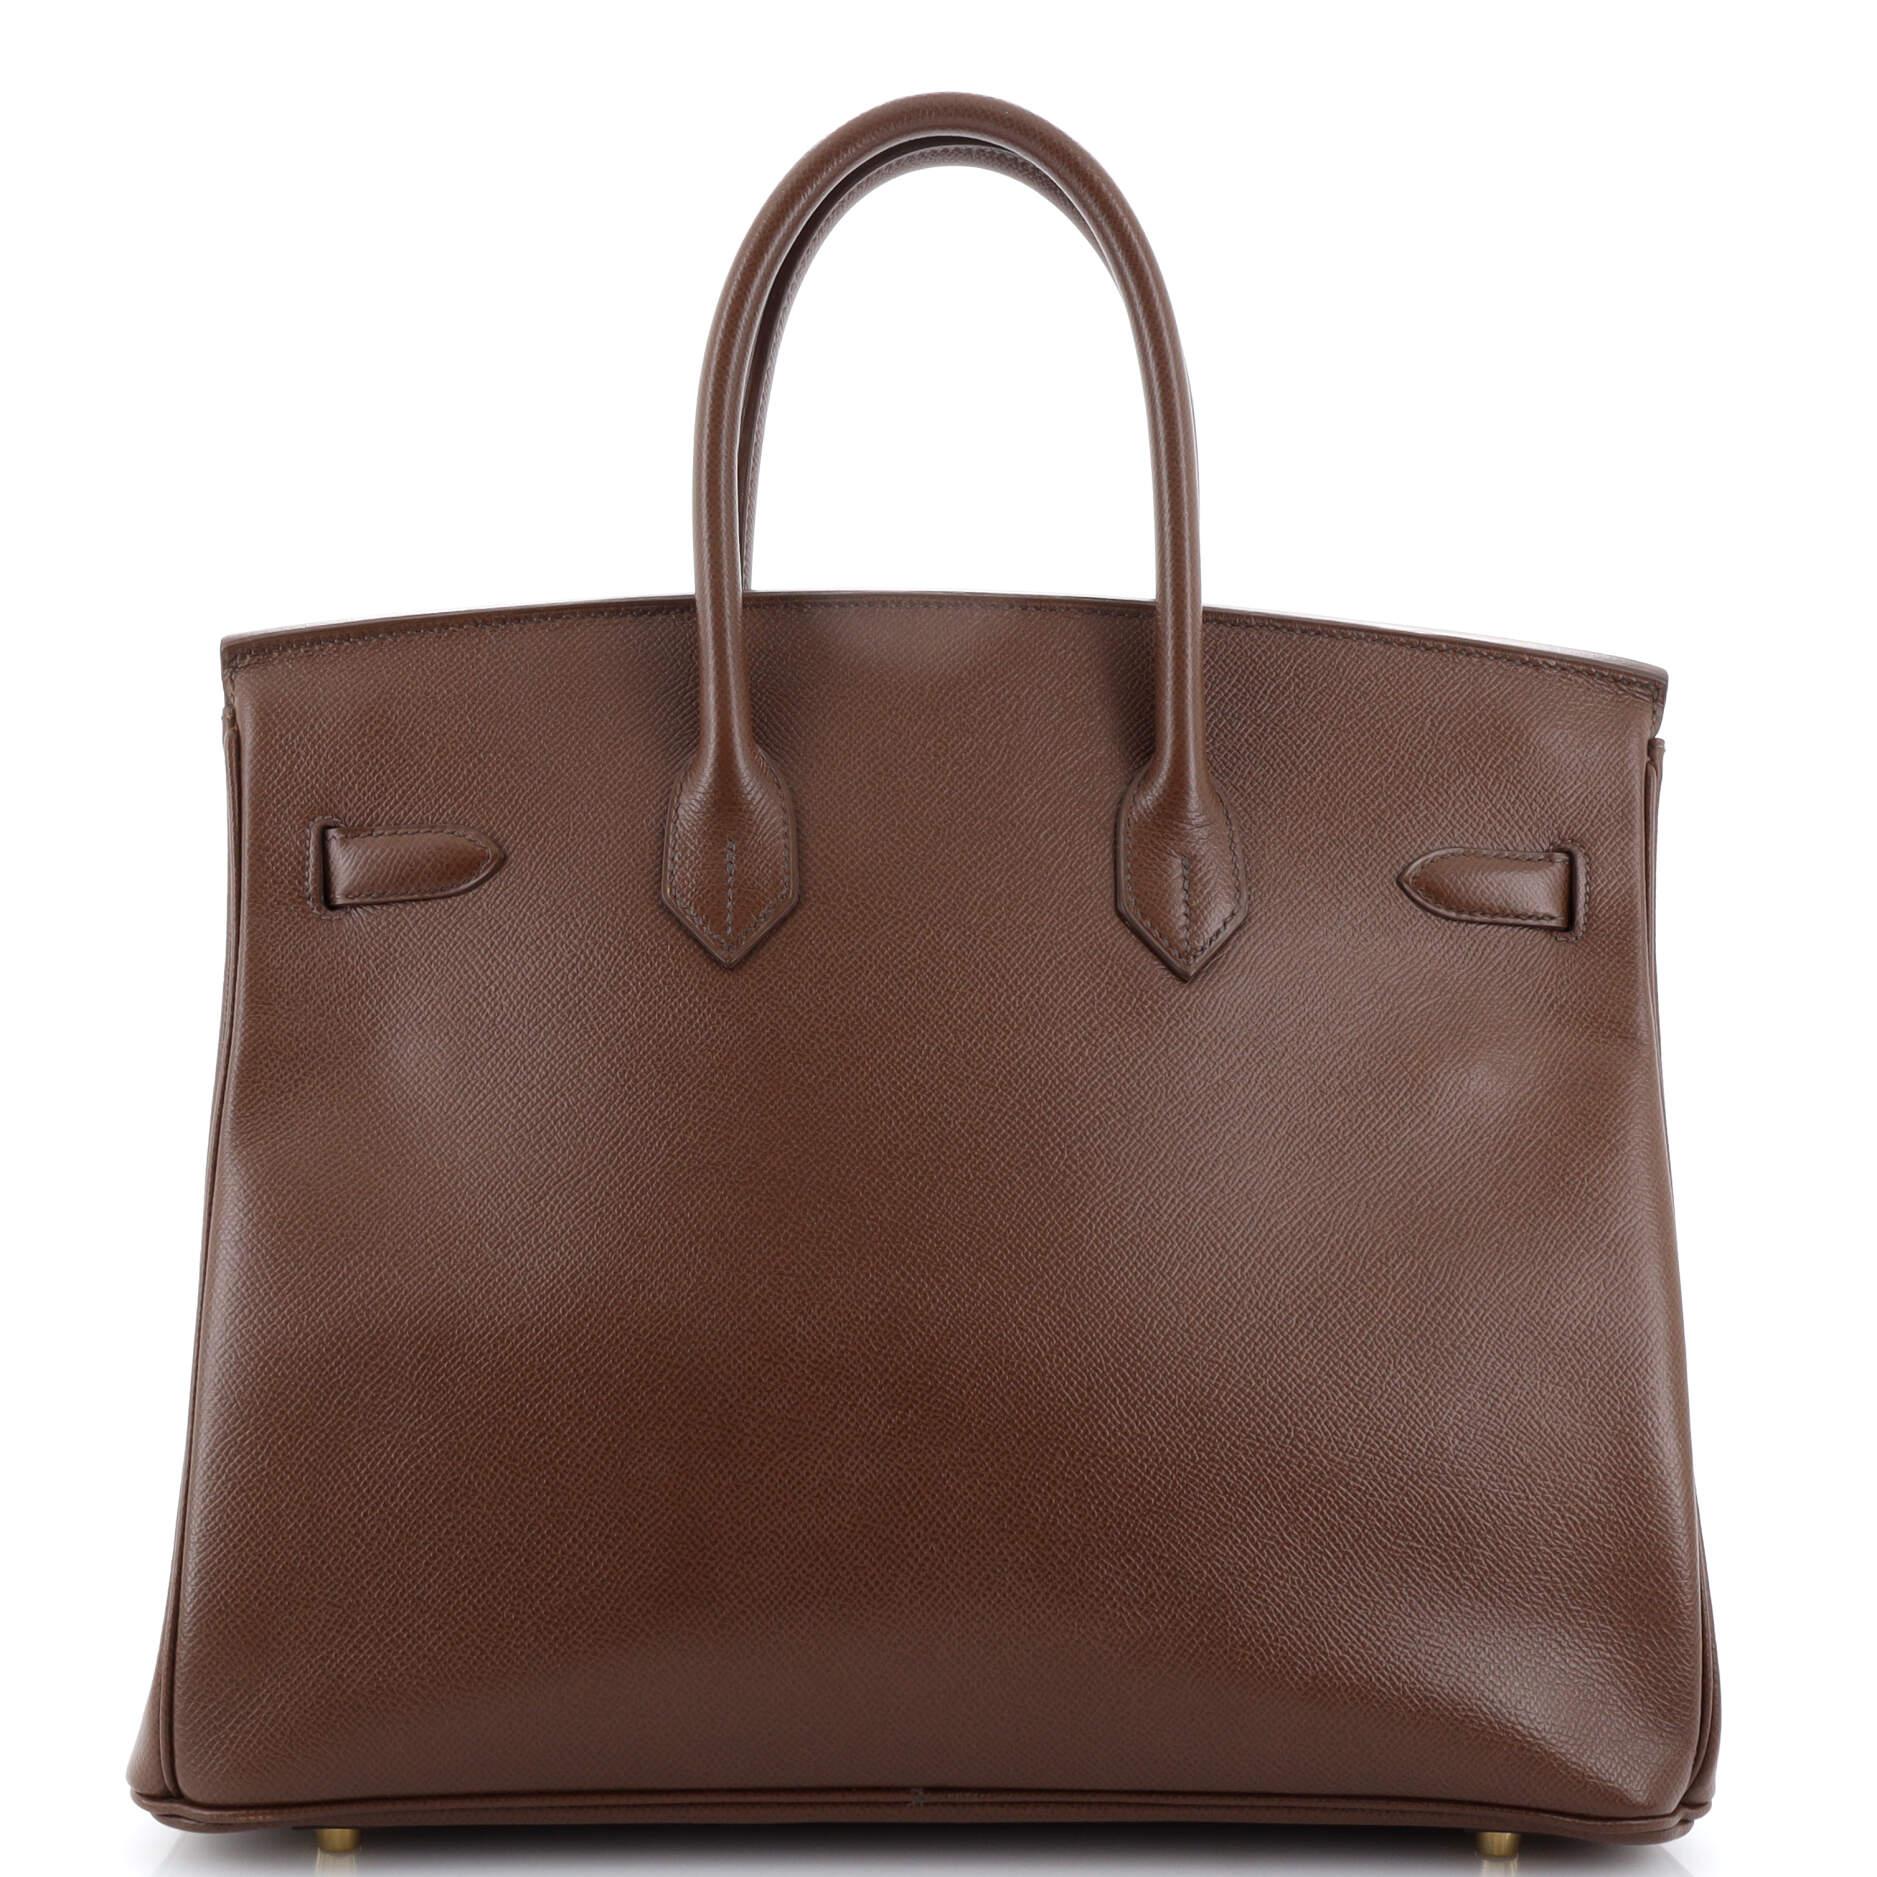 Women's Hermes Birkin Handbag Marron Foncé Courchevel with Gold Hardware 35